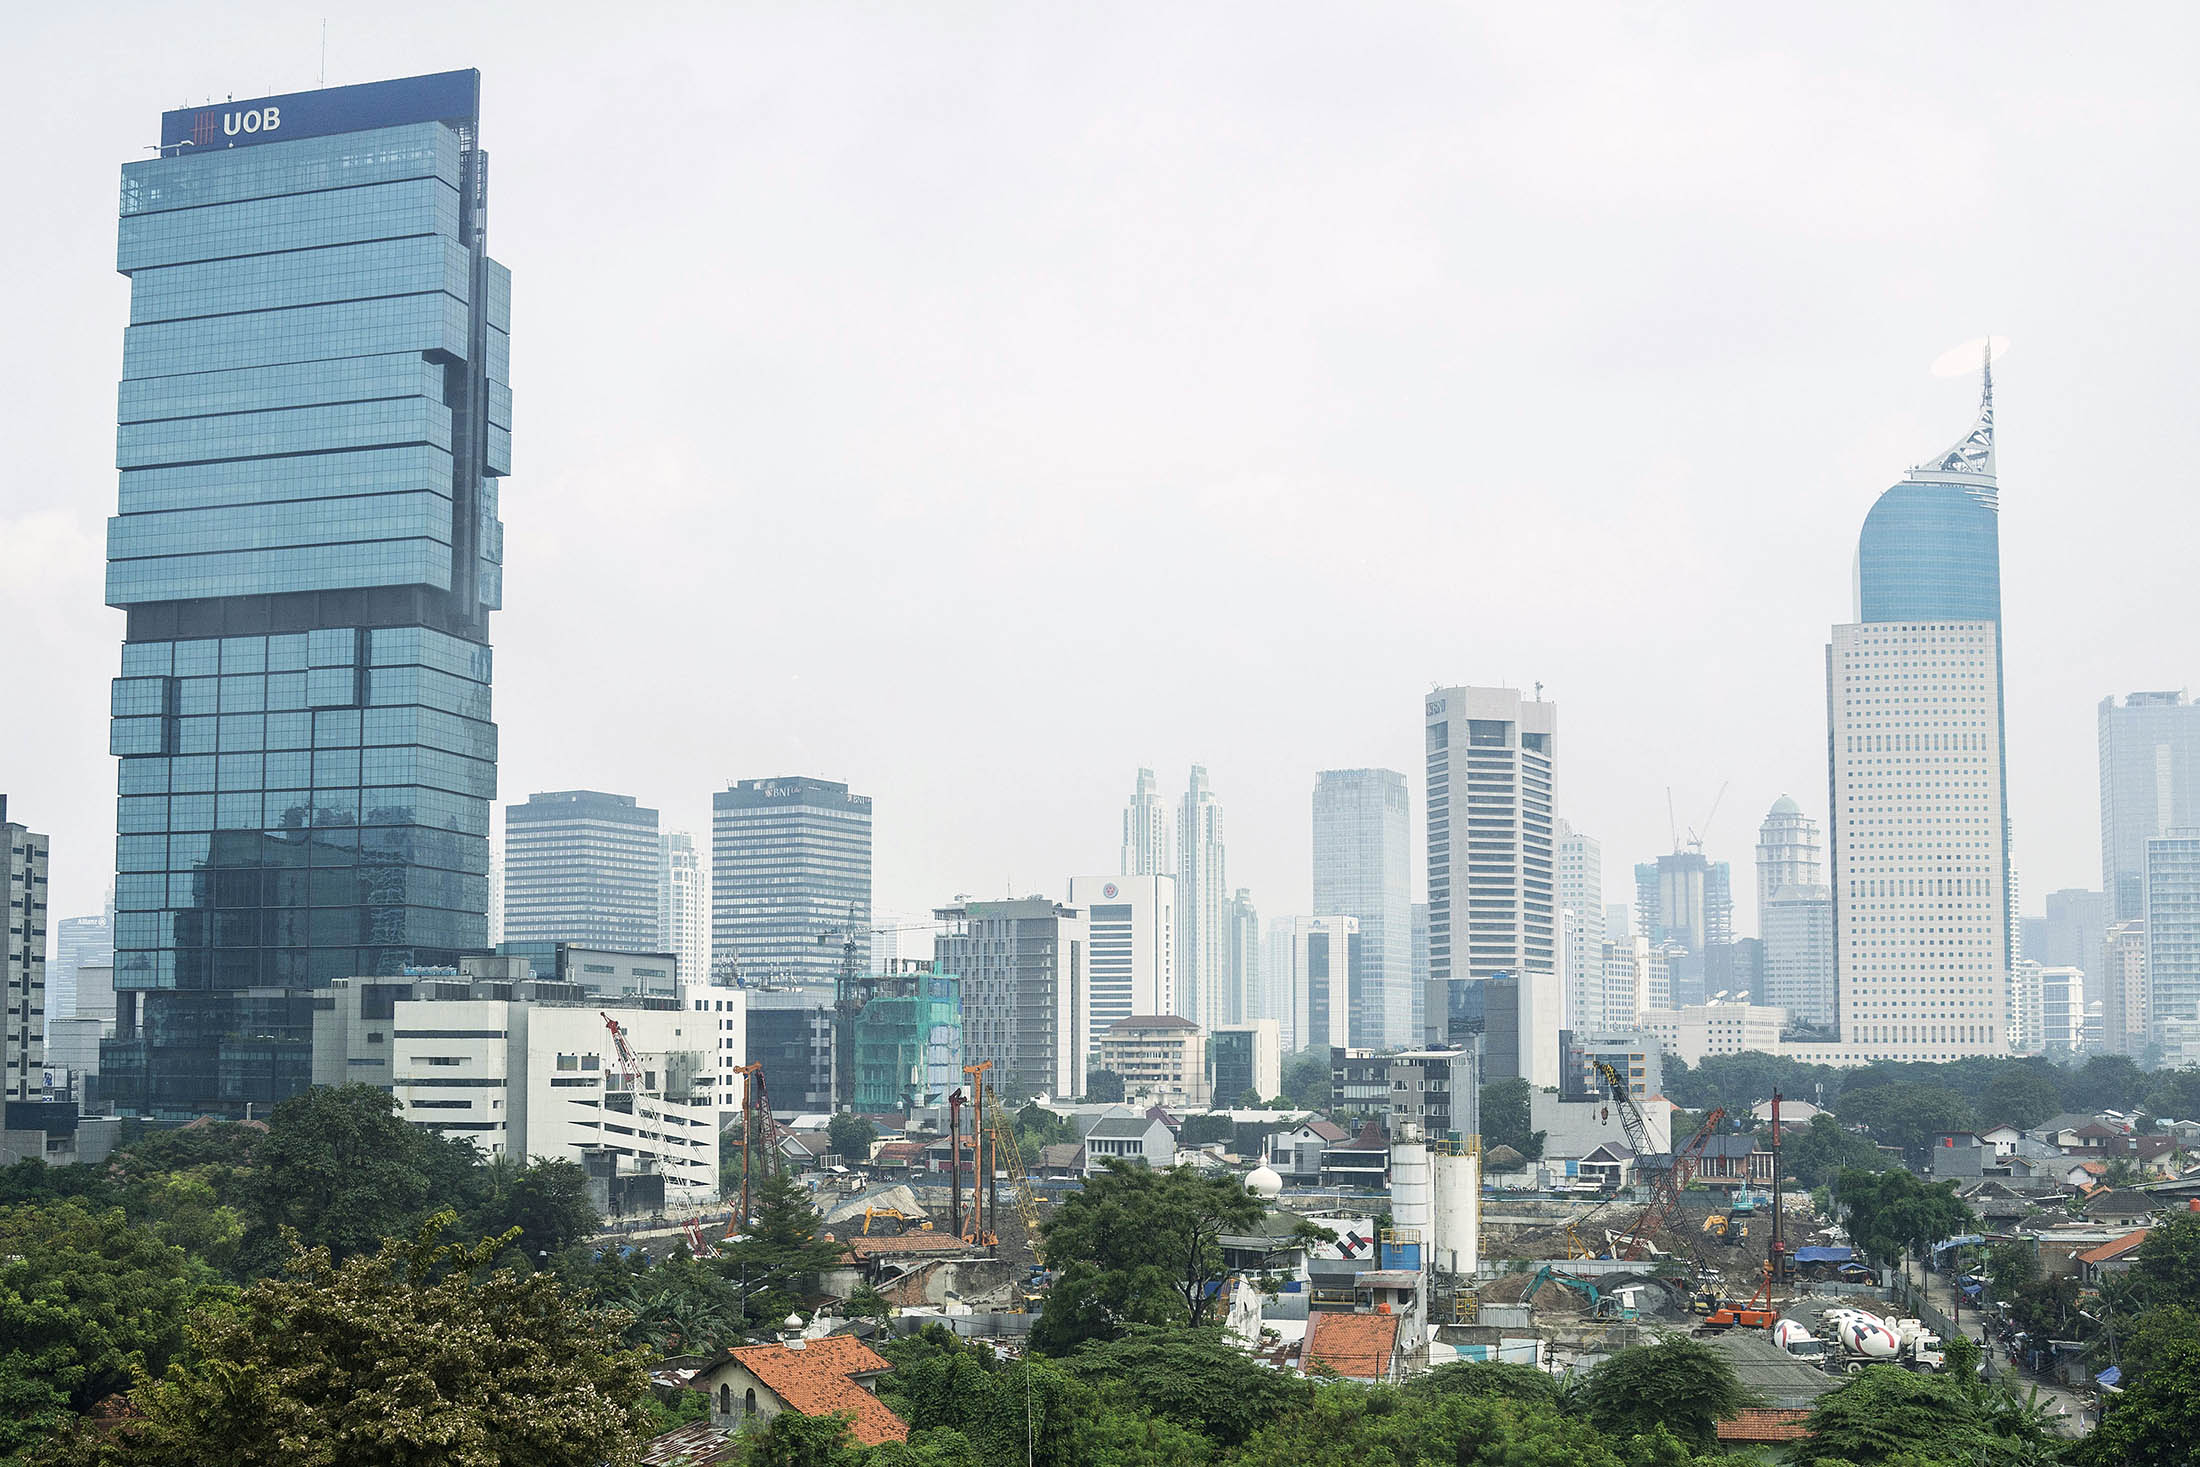 Indonesia Terminates JPMorgan Partnerships After Downgrade - Bloomberg